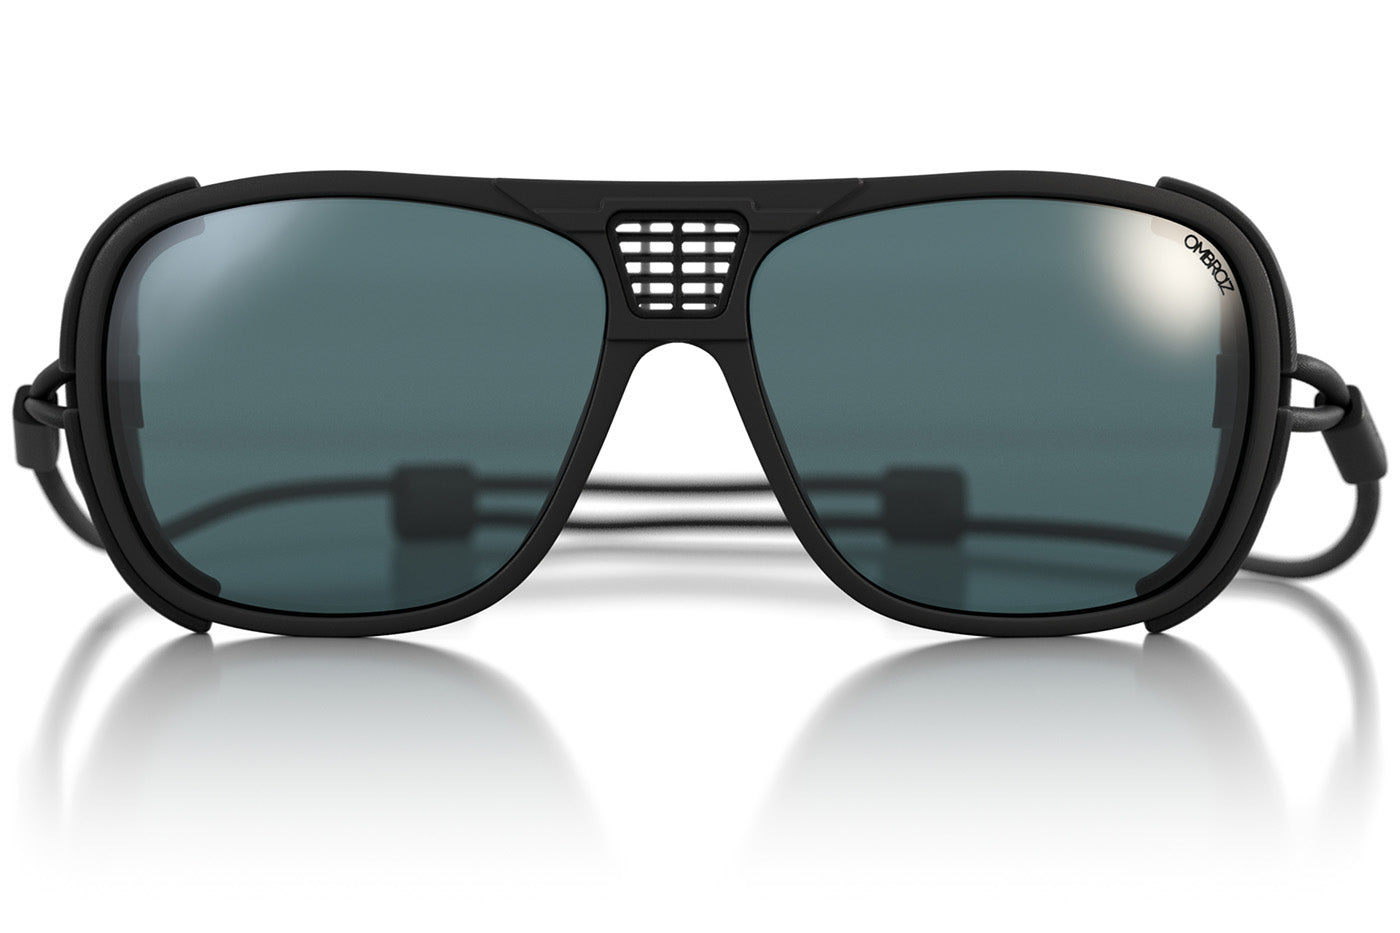 Charcoal_grey_shields Ombraz unisex charcoal grey leggero armless sunglasses with visors